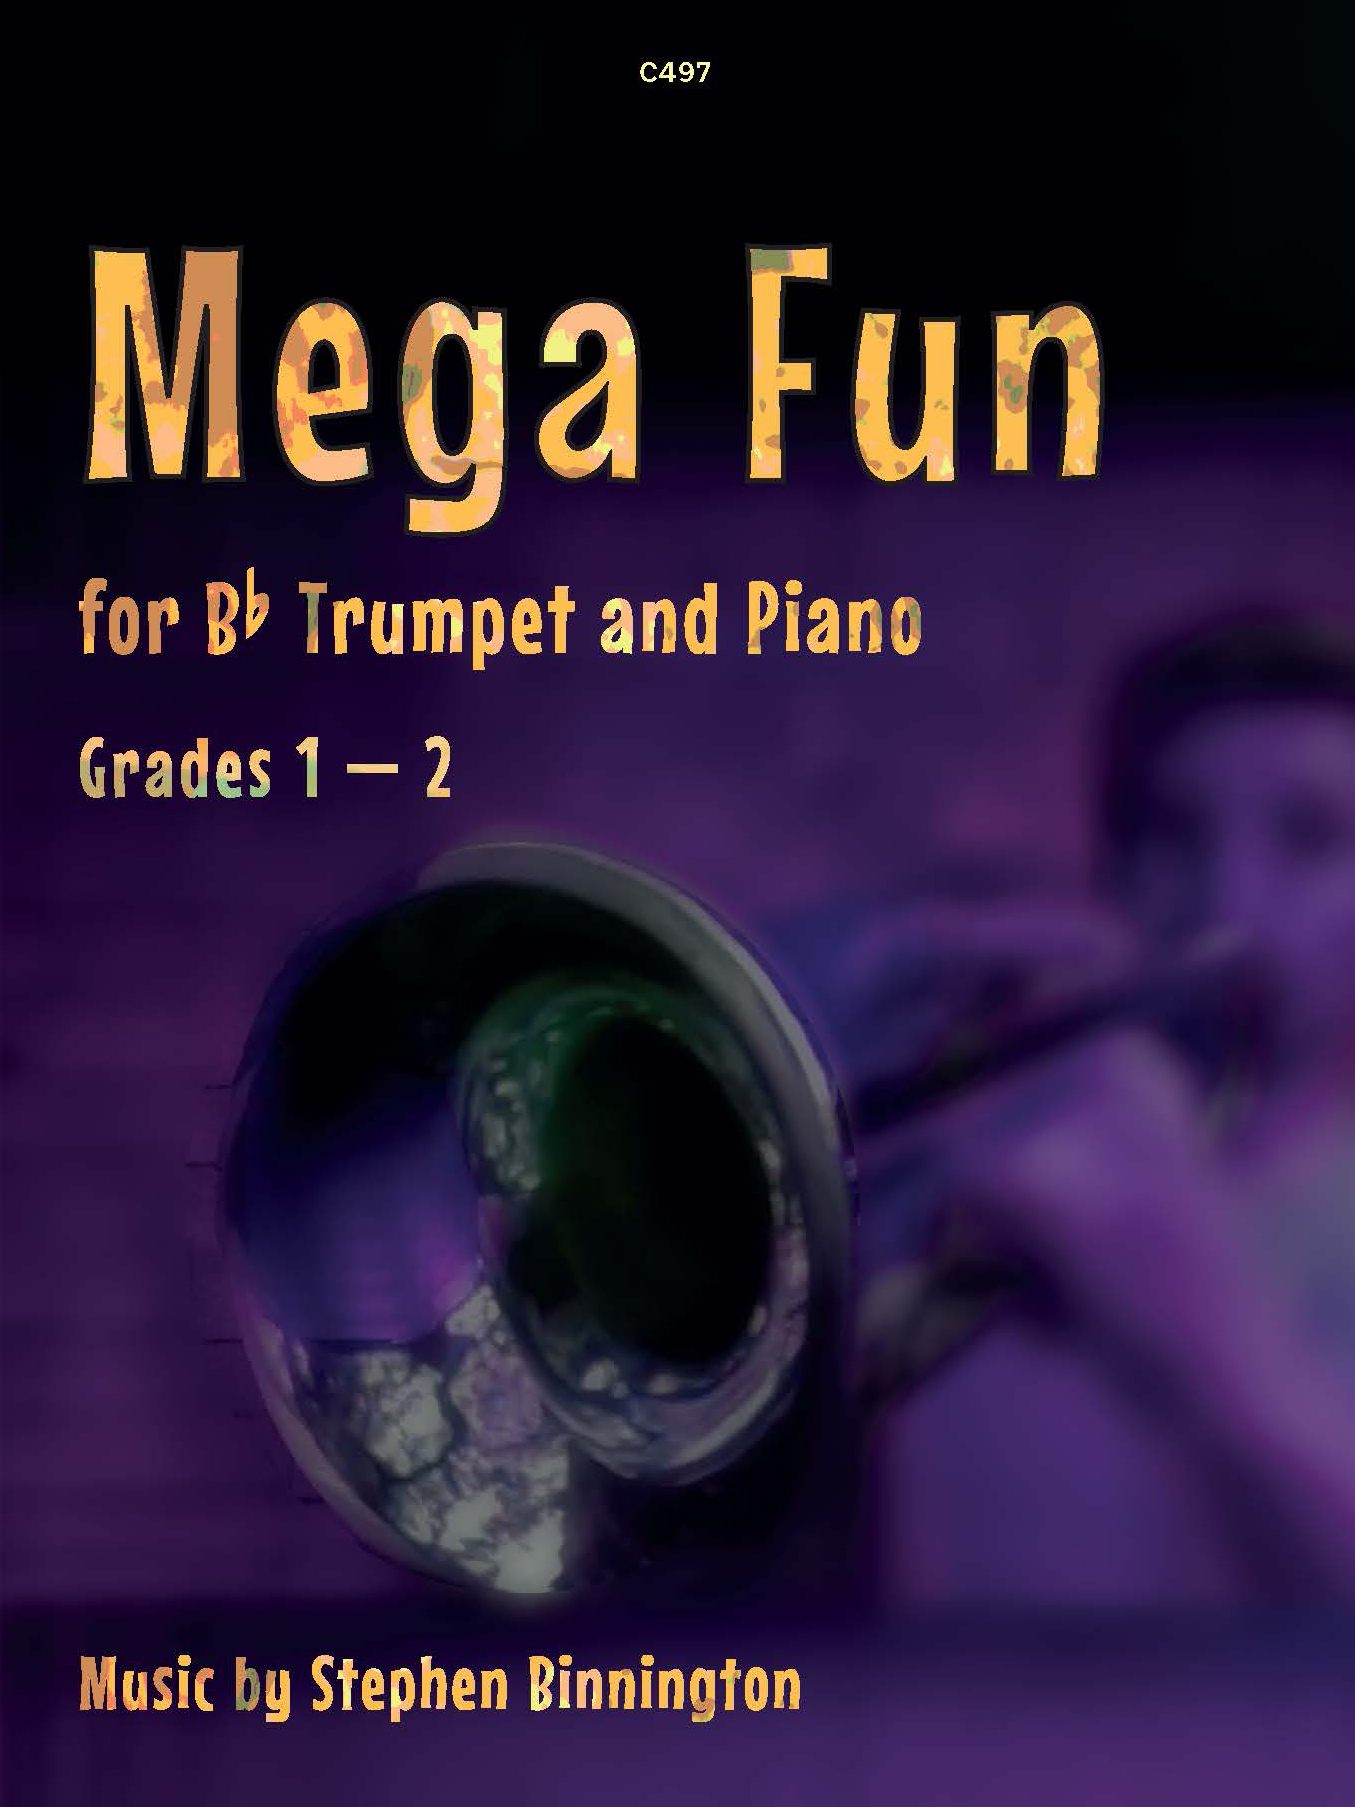 Mega Fun Binnington Trumpet & Piano Sheet Music Songbook